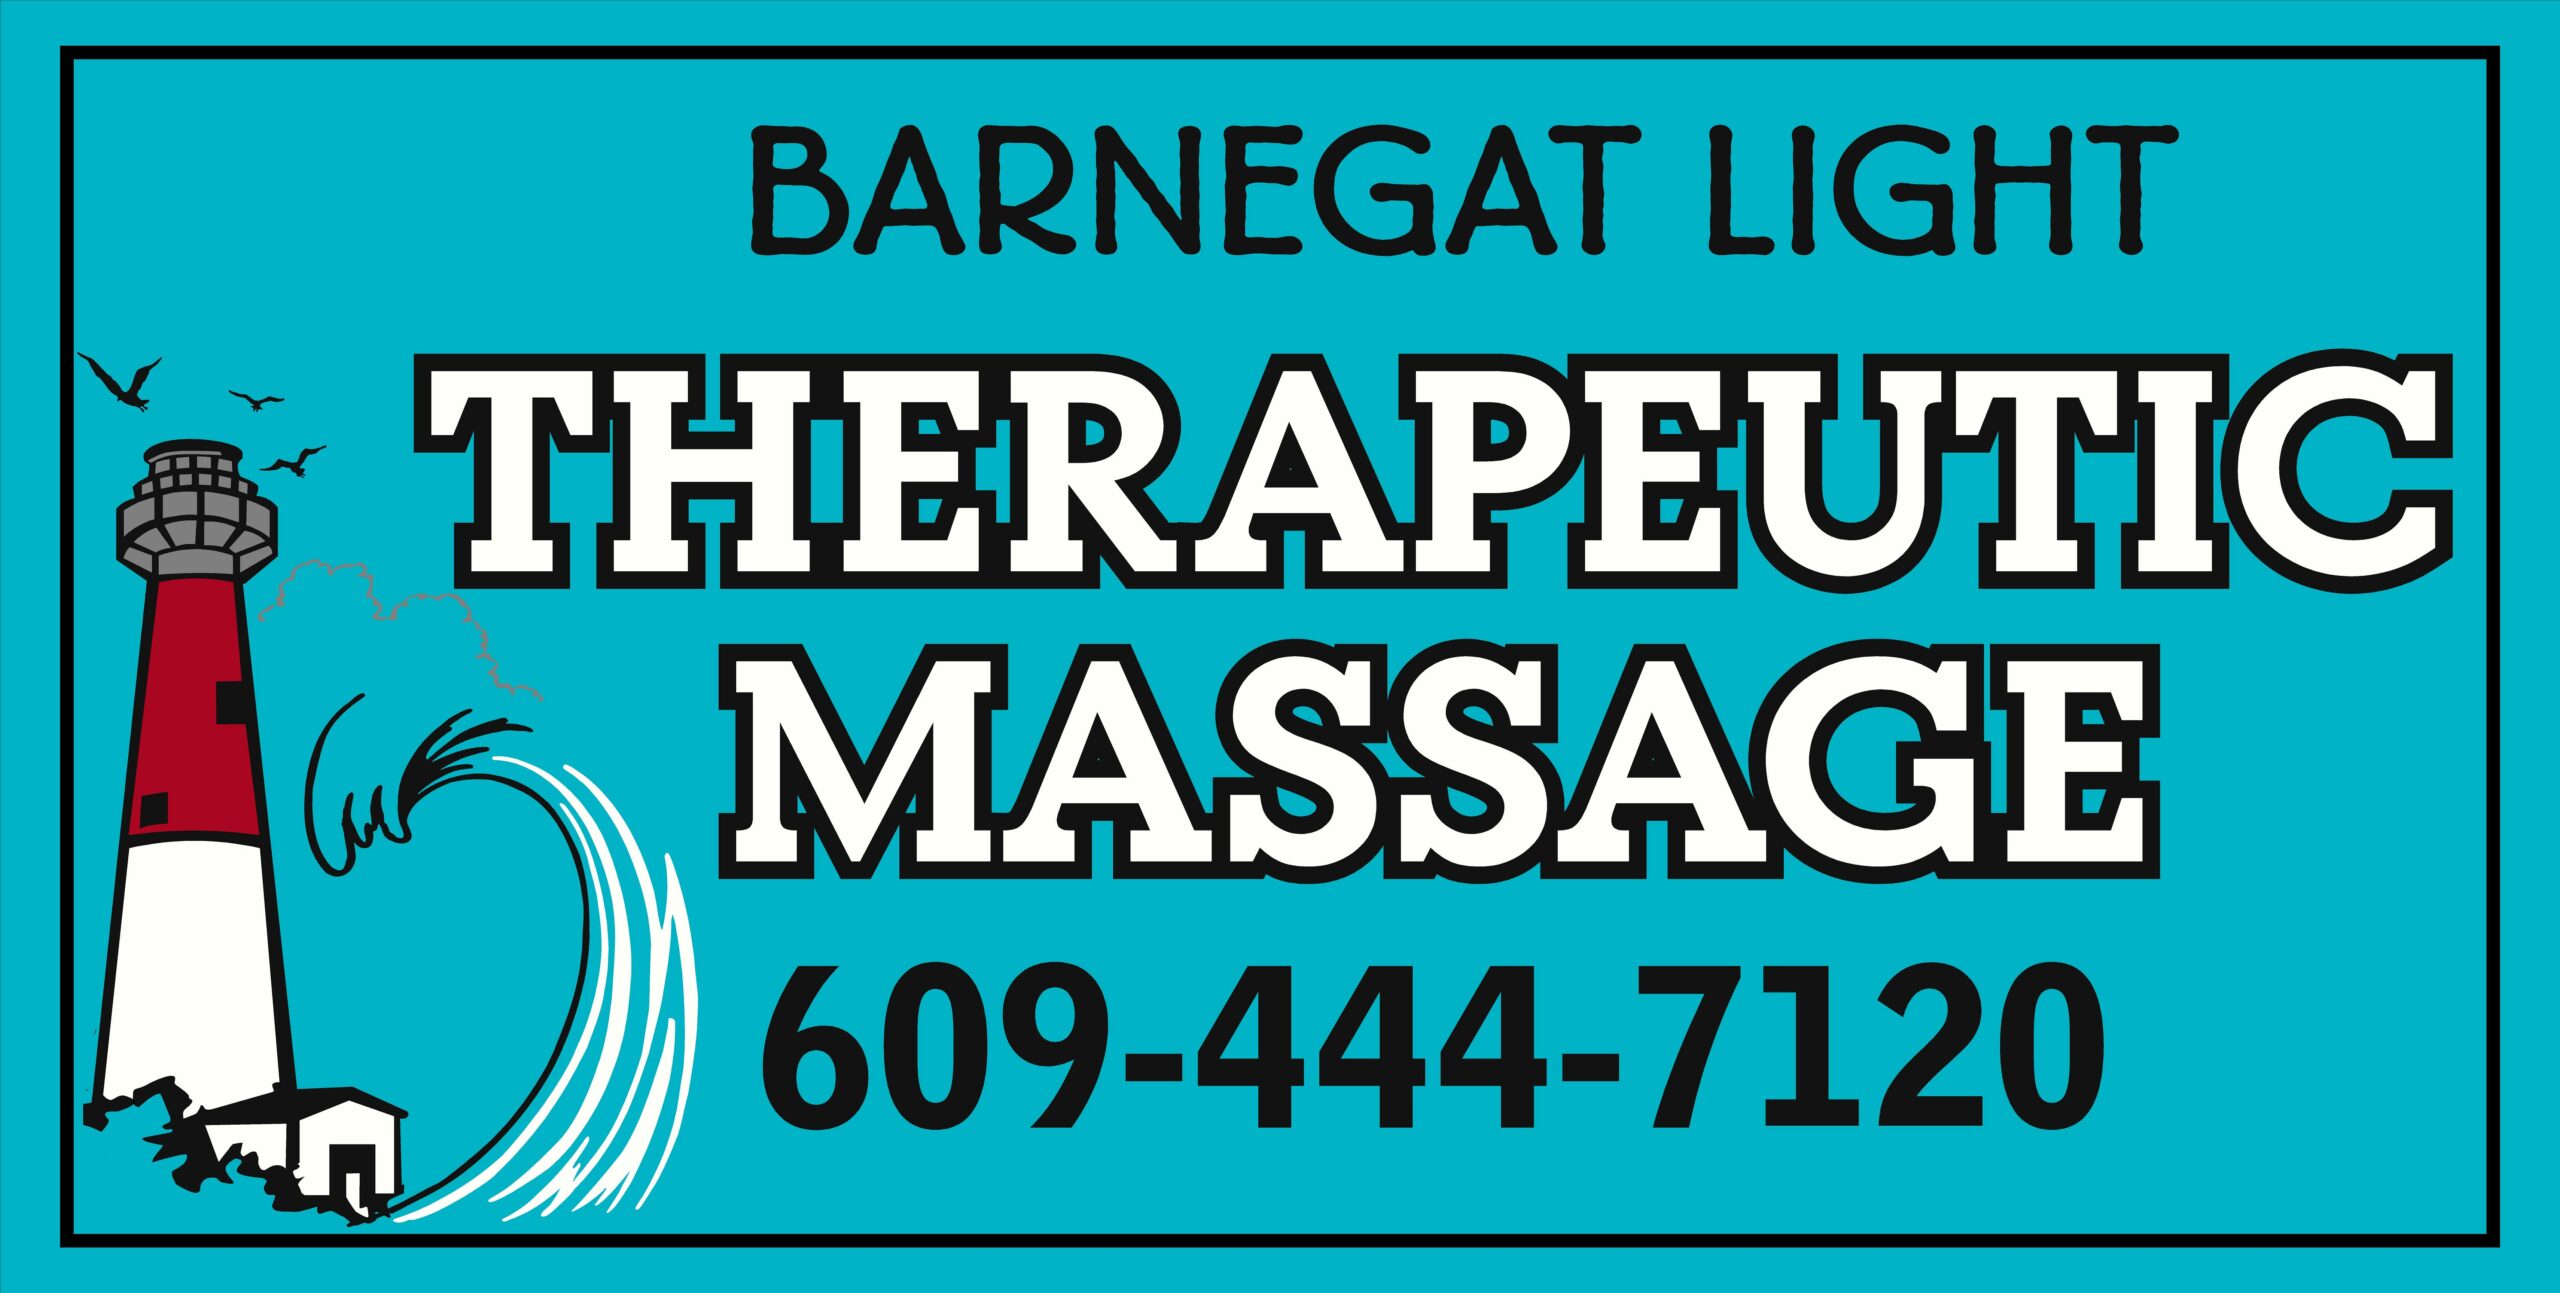 Barnegat Light Therapeutic Massage - 609-444-7120